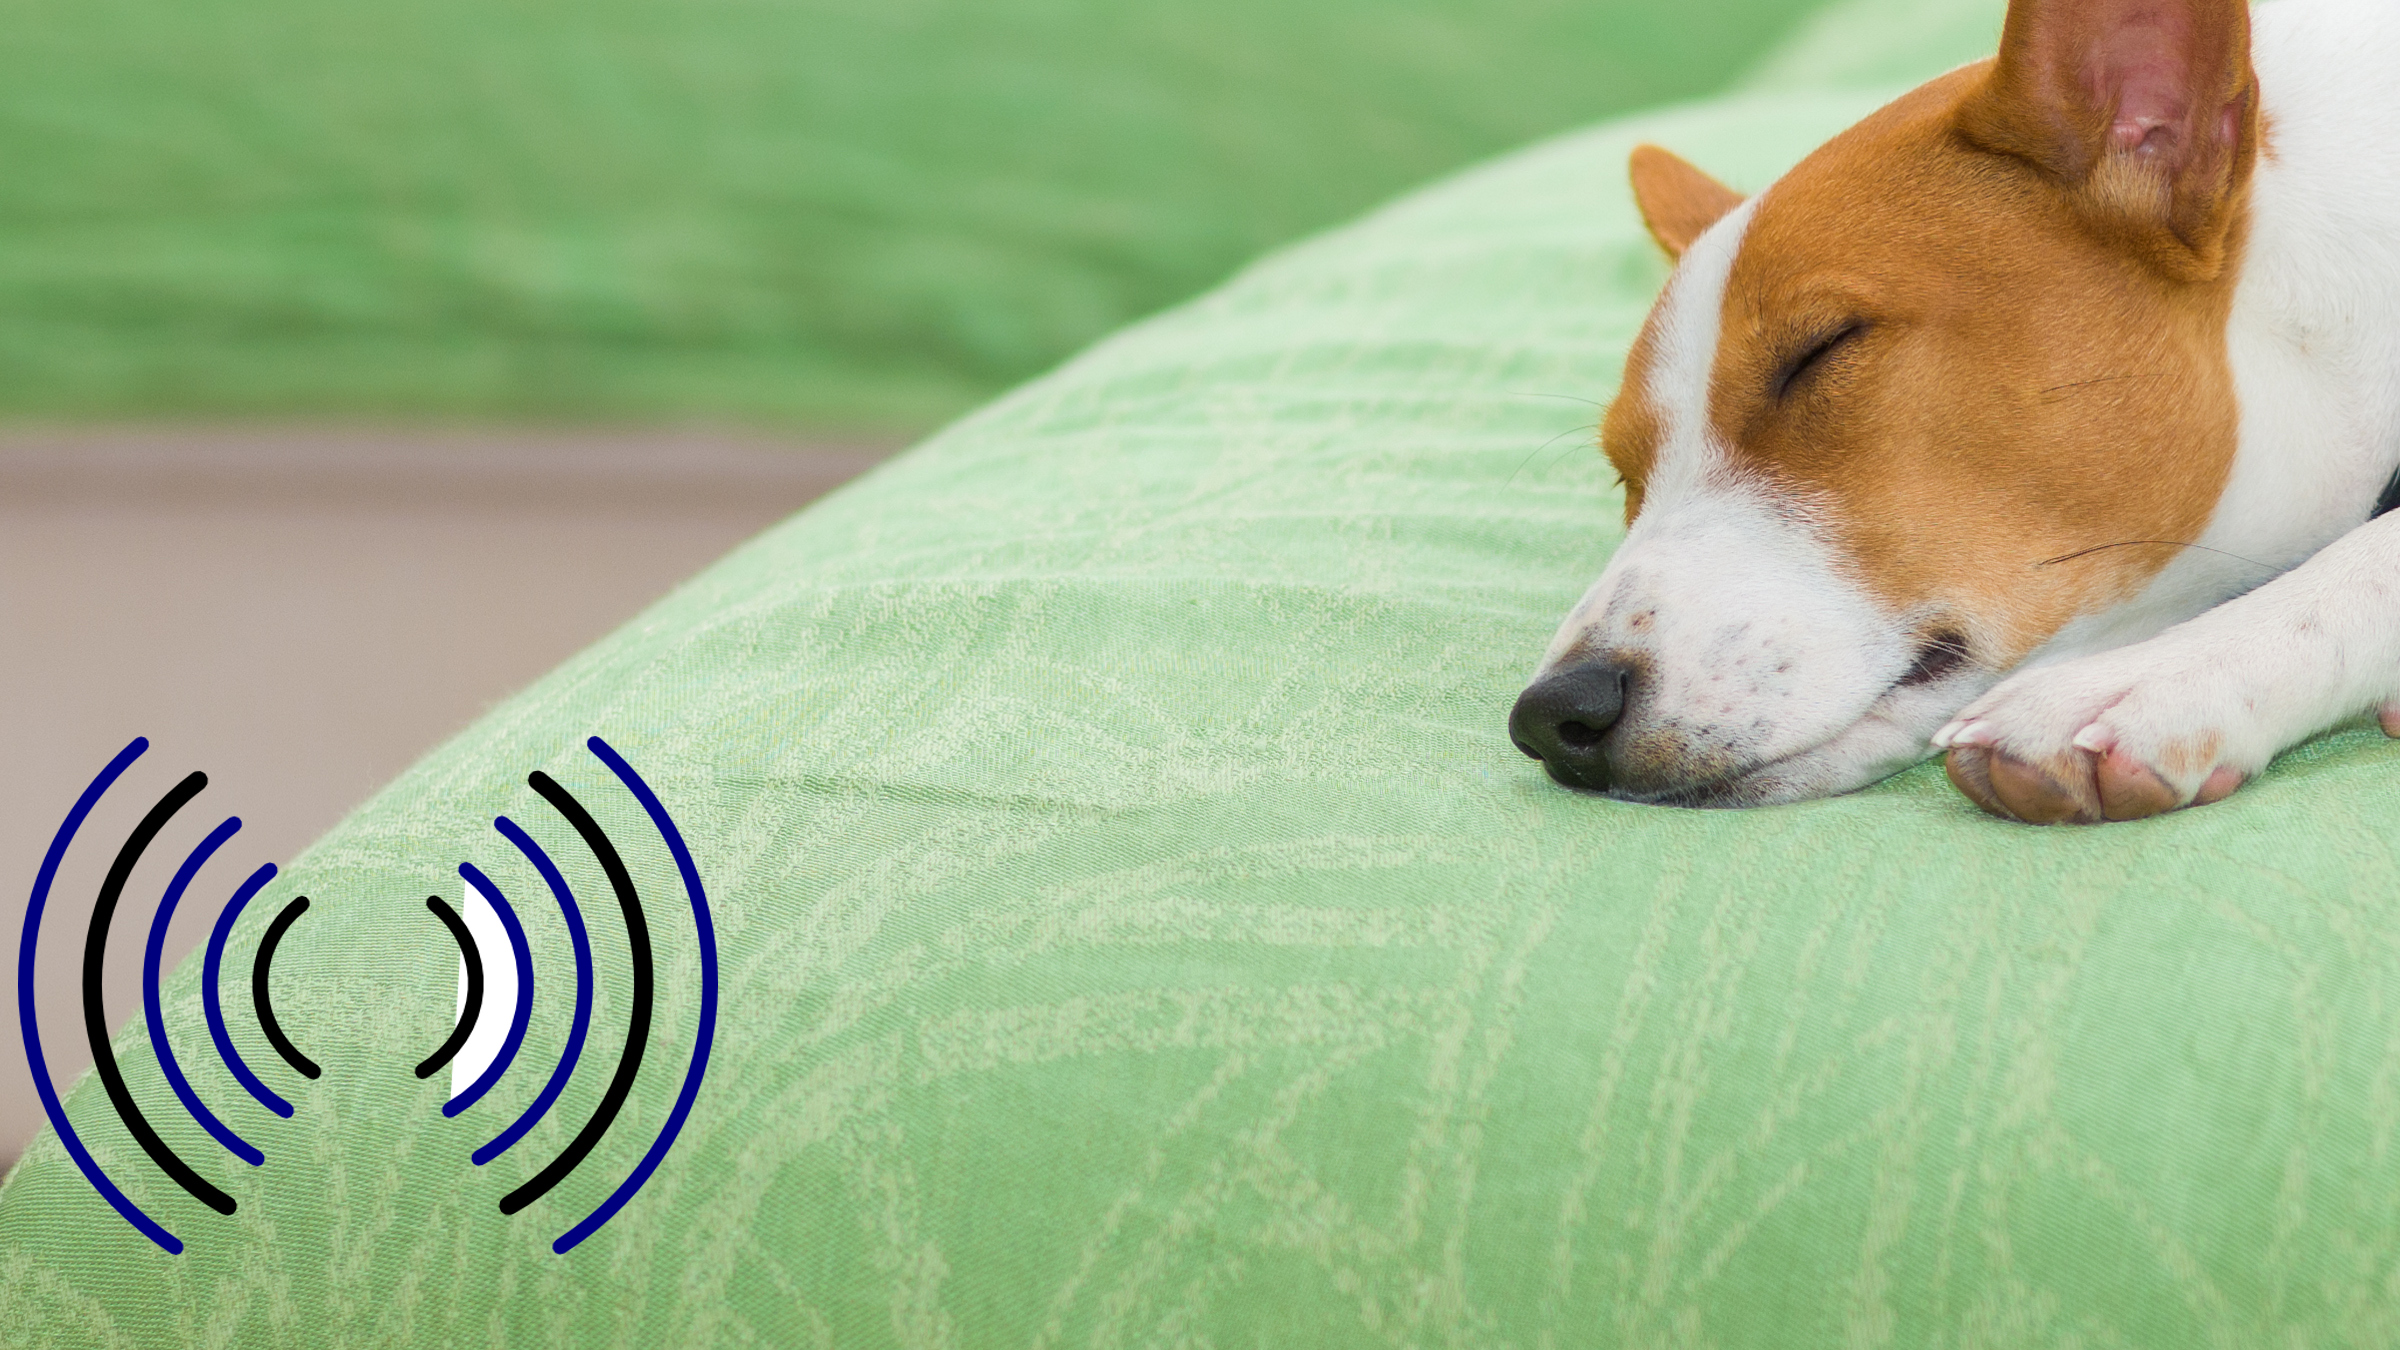 furniture emits radio waves while dog sleeps